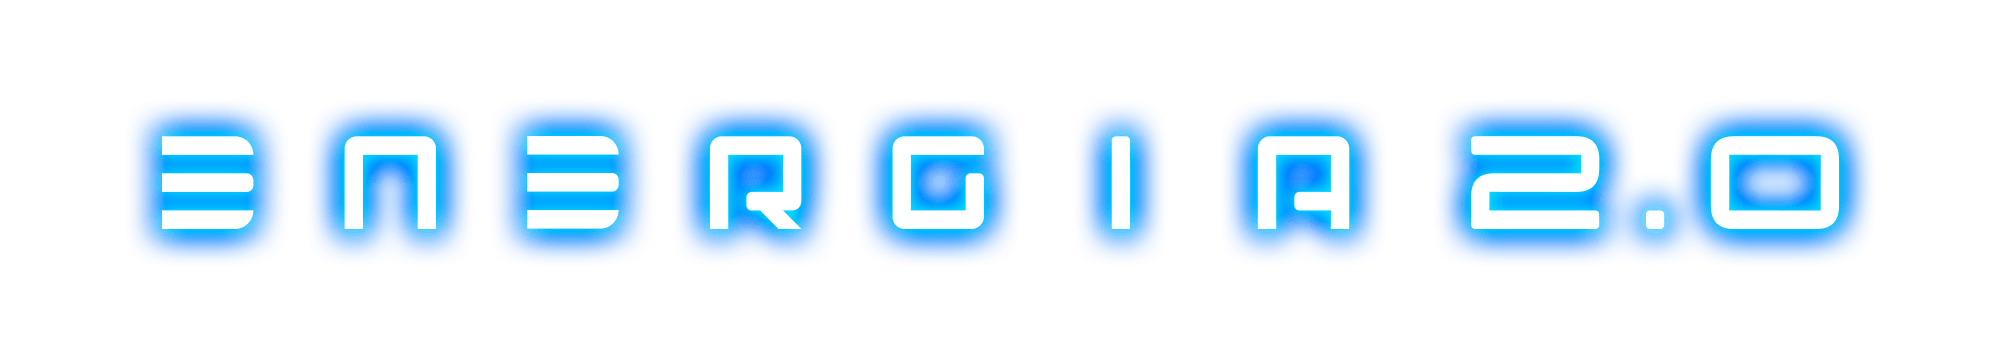 Logo_Energia-2.0_glow_A.png